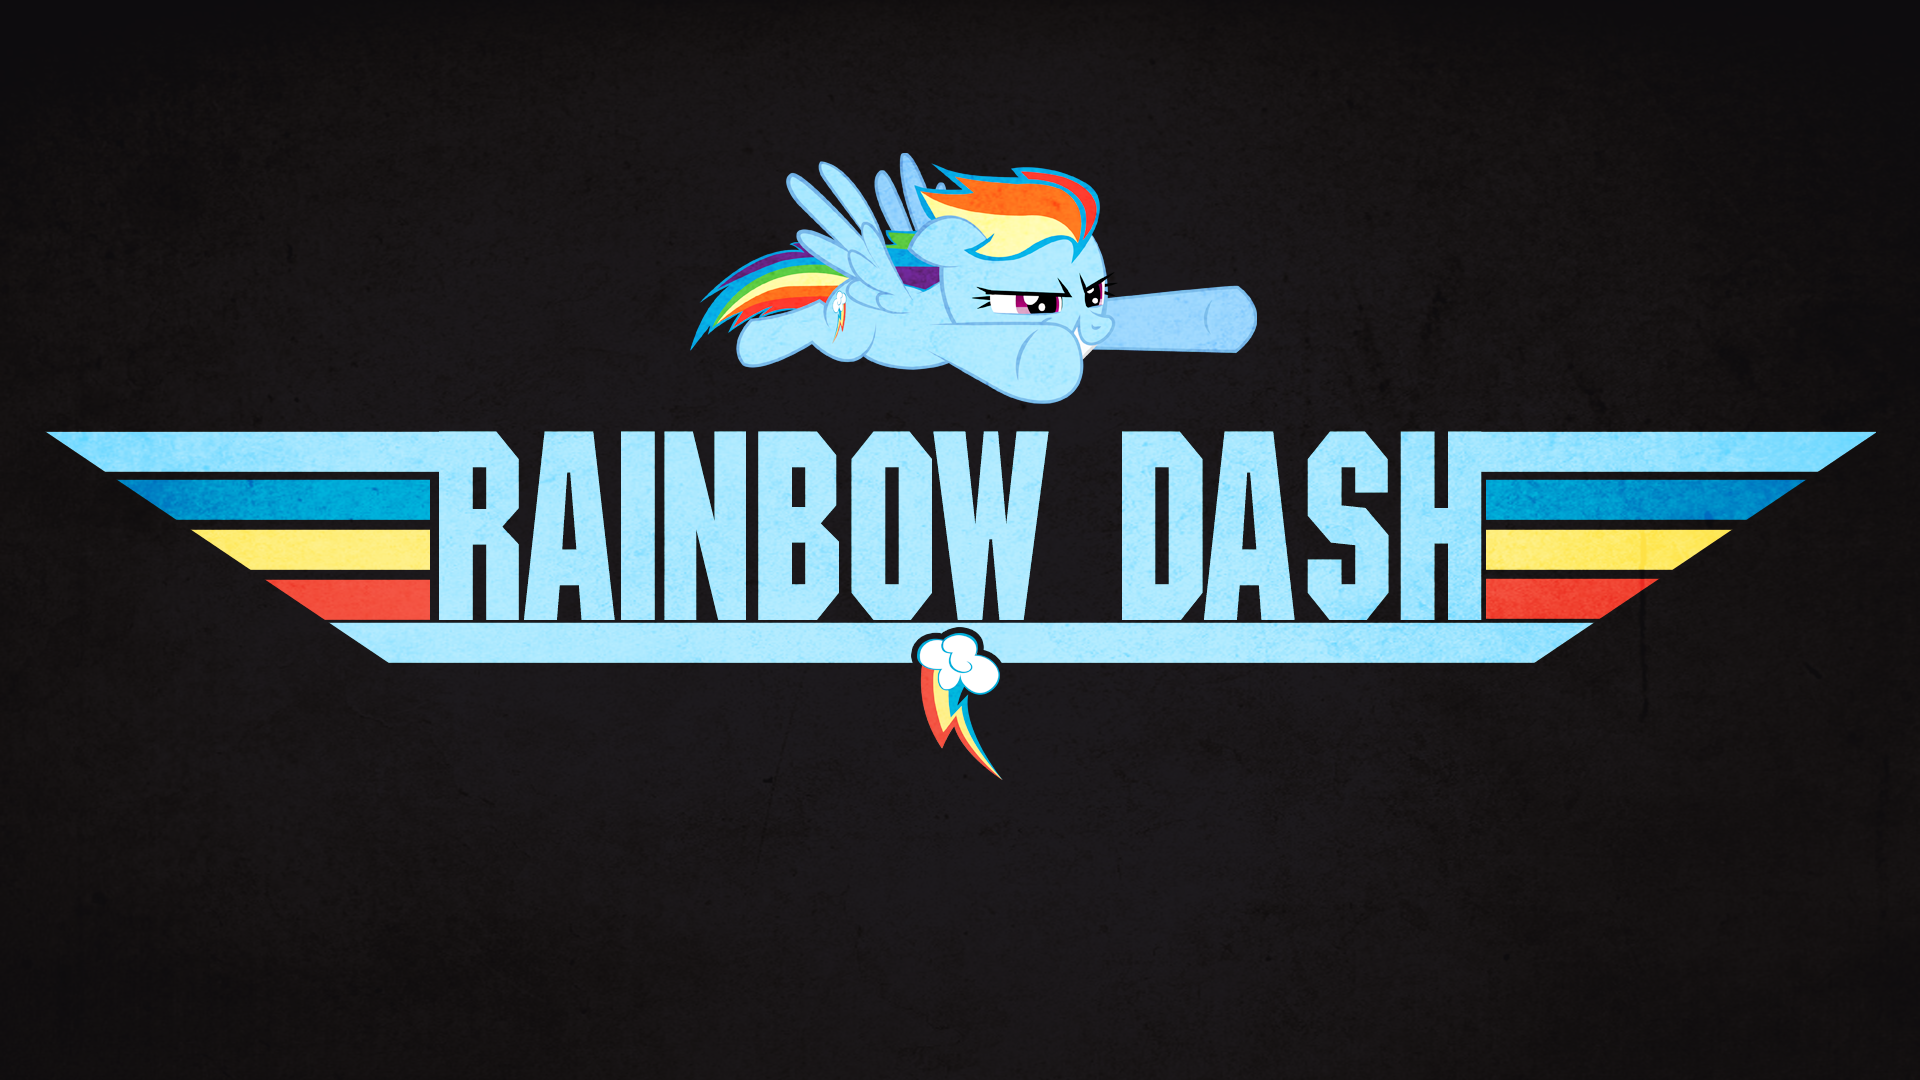 Rainbow Dash wallpaper by noxxiic and Silentmatten